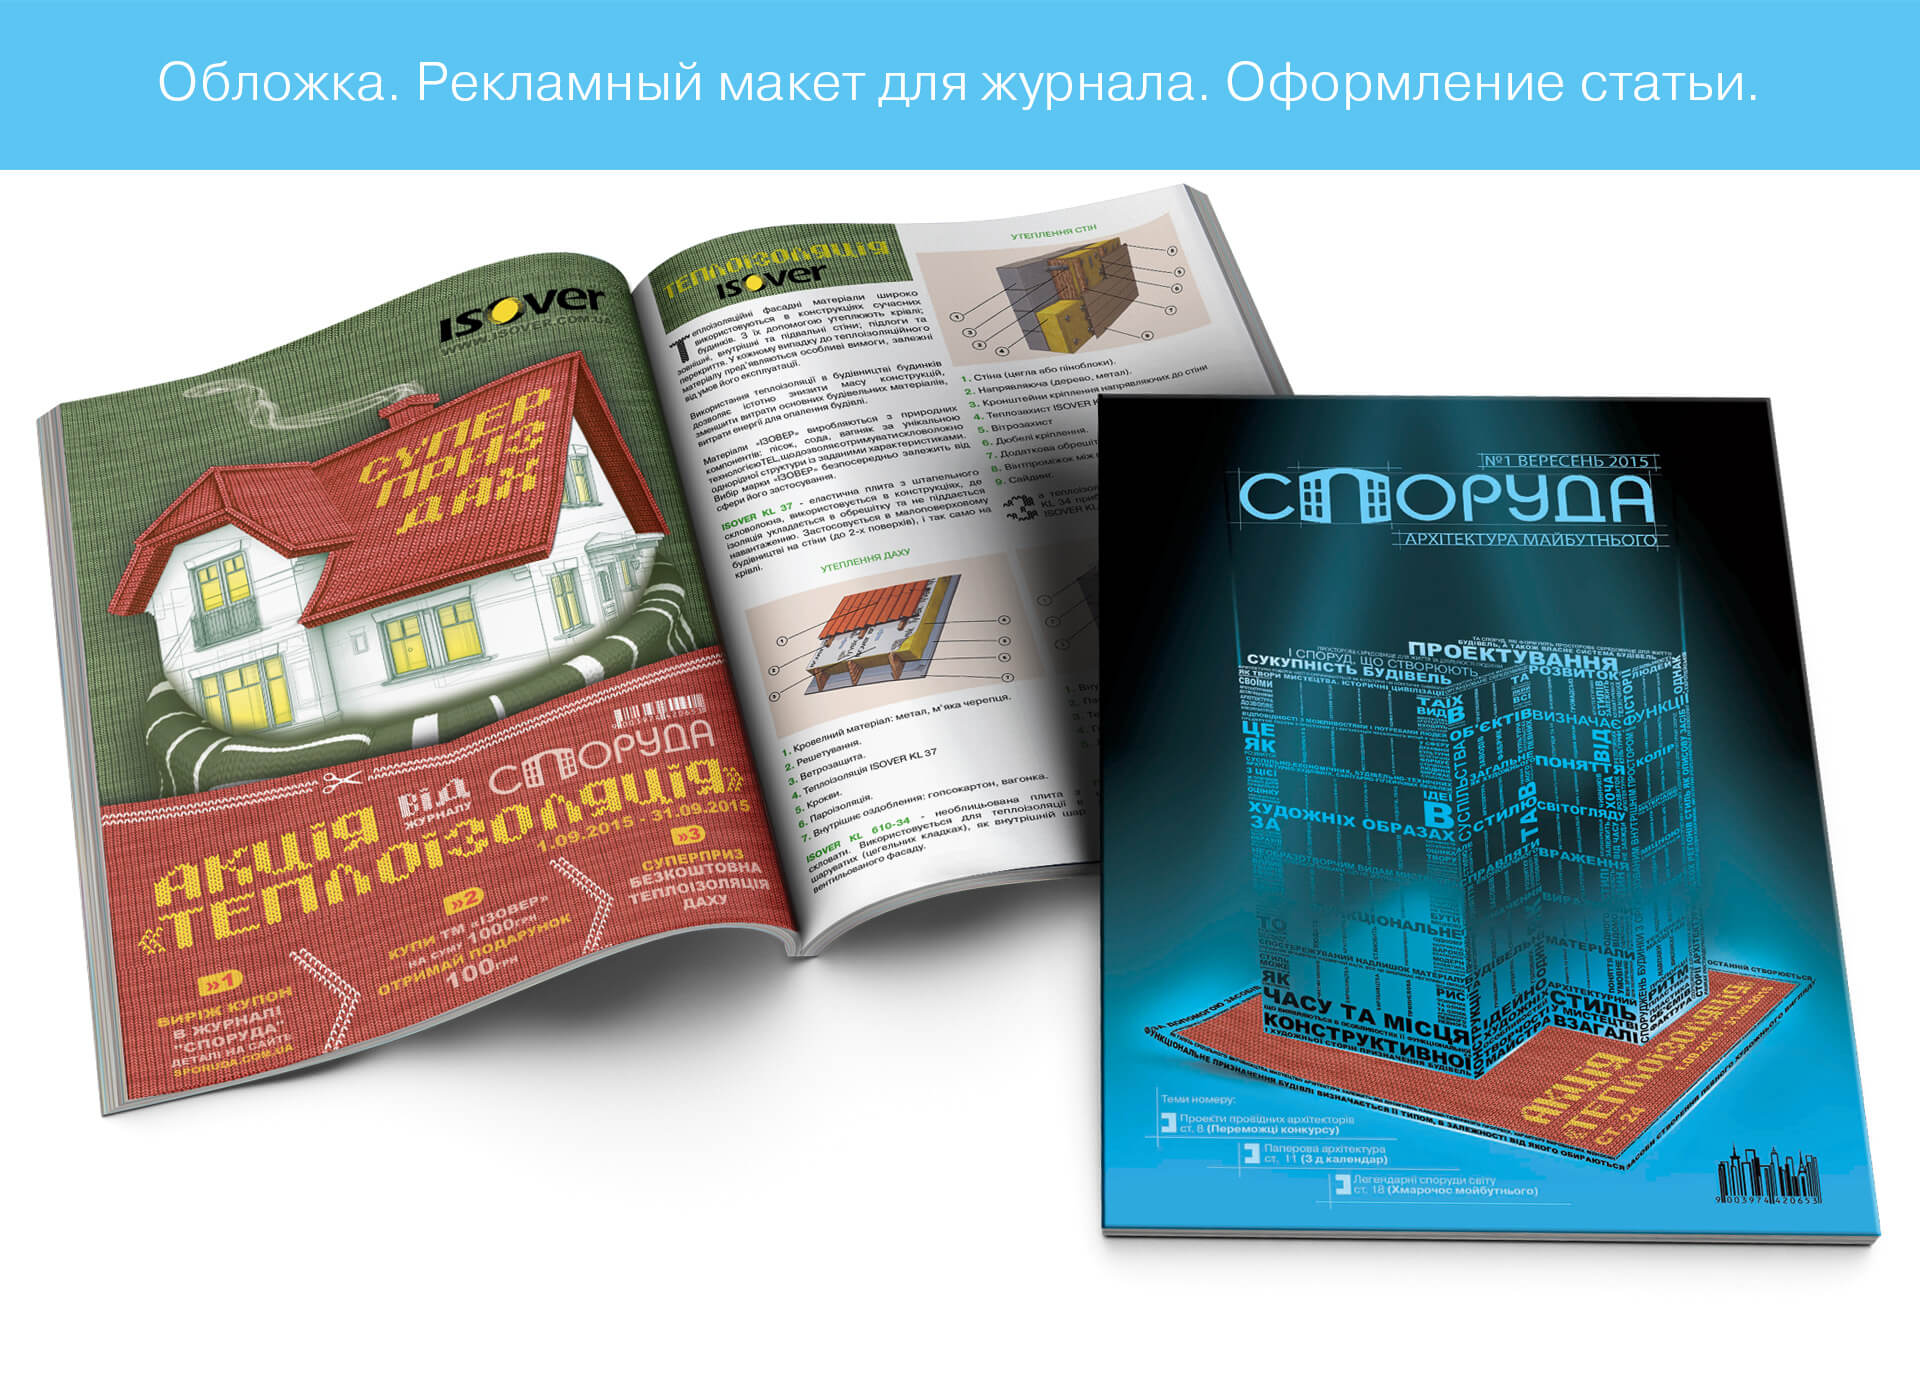 prokochuk_irina_architectural-magazine-sporuda_advertising-campaign_1